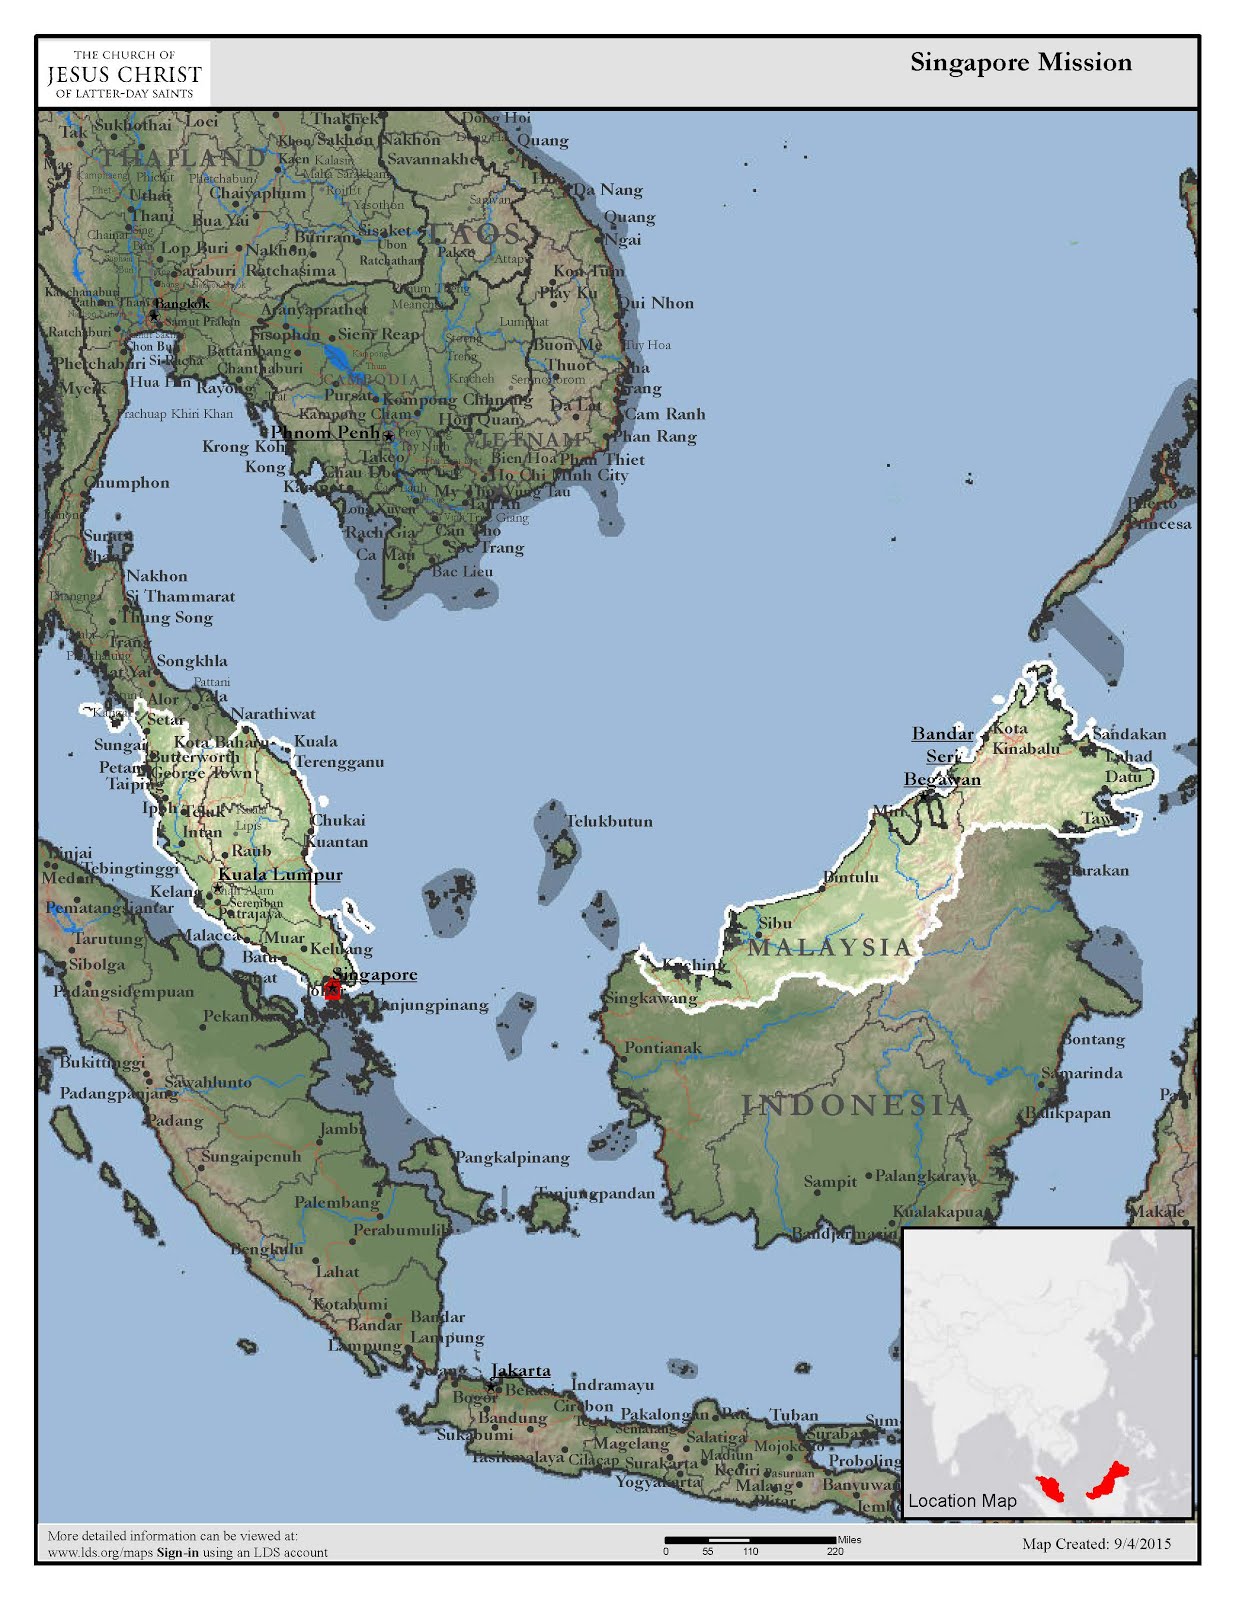 Singapore/Malaysian Region Mission Map